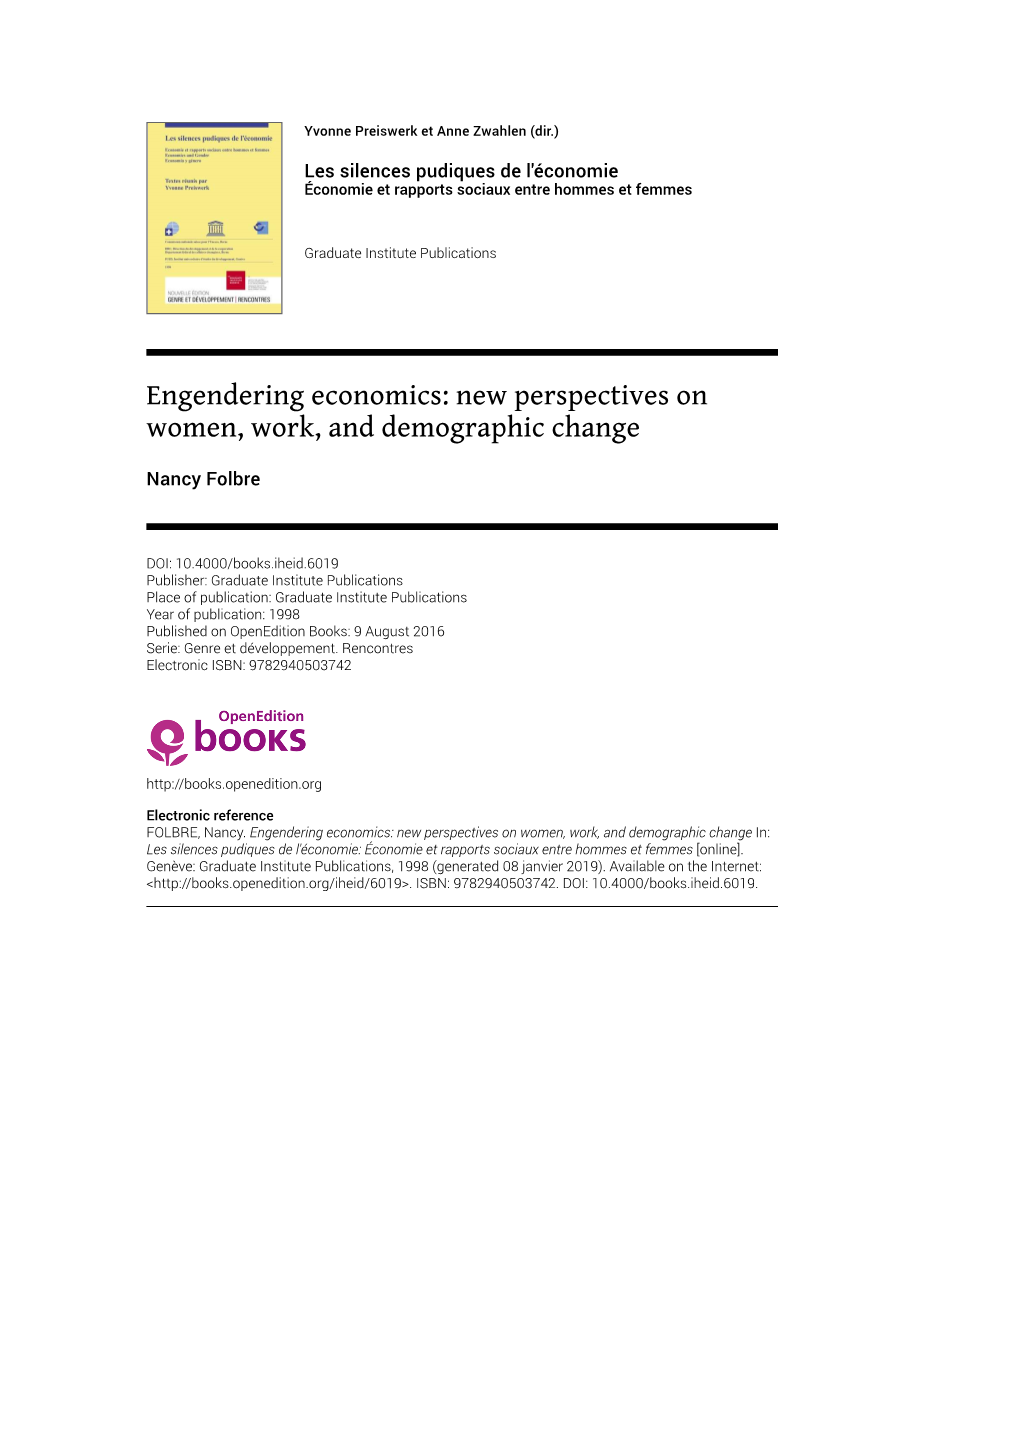 Engendering Economics: New Perspectives on Women, Work, and Demographic Change